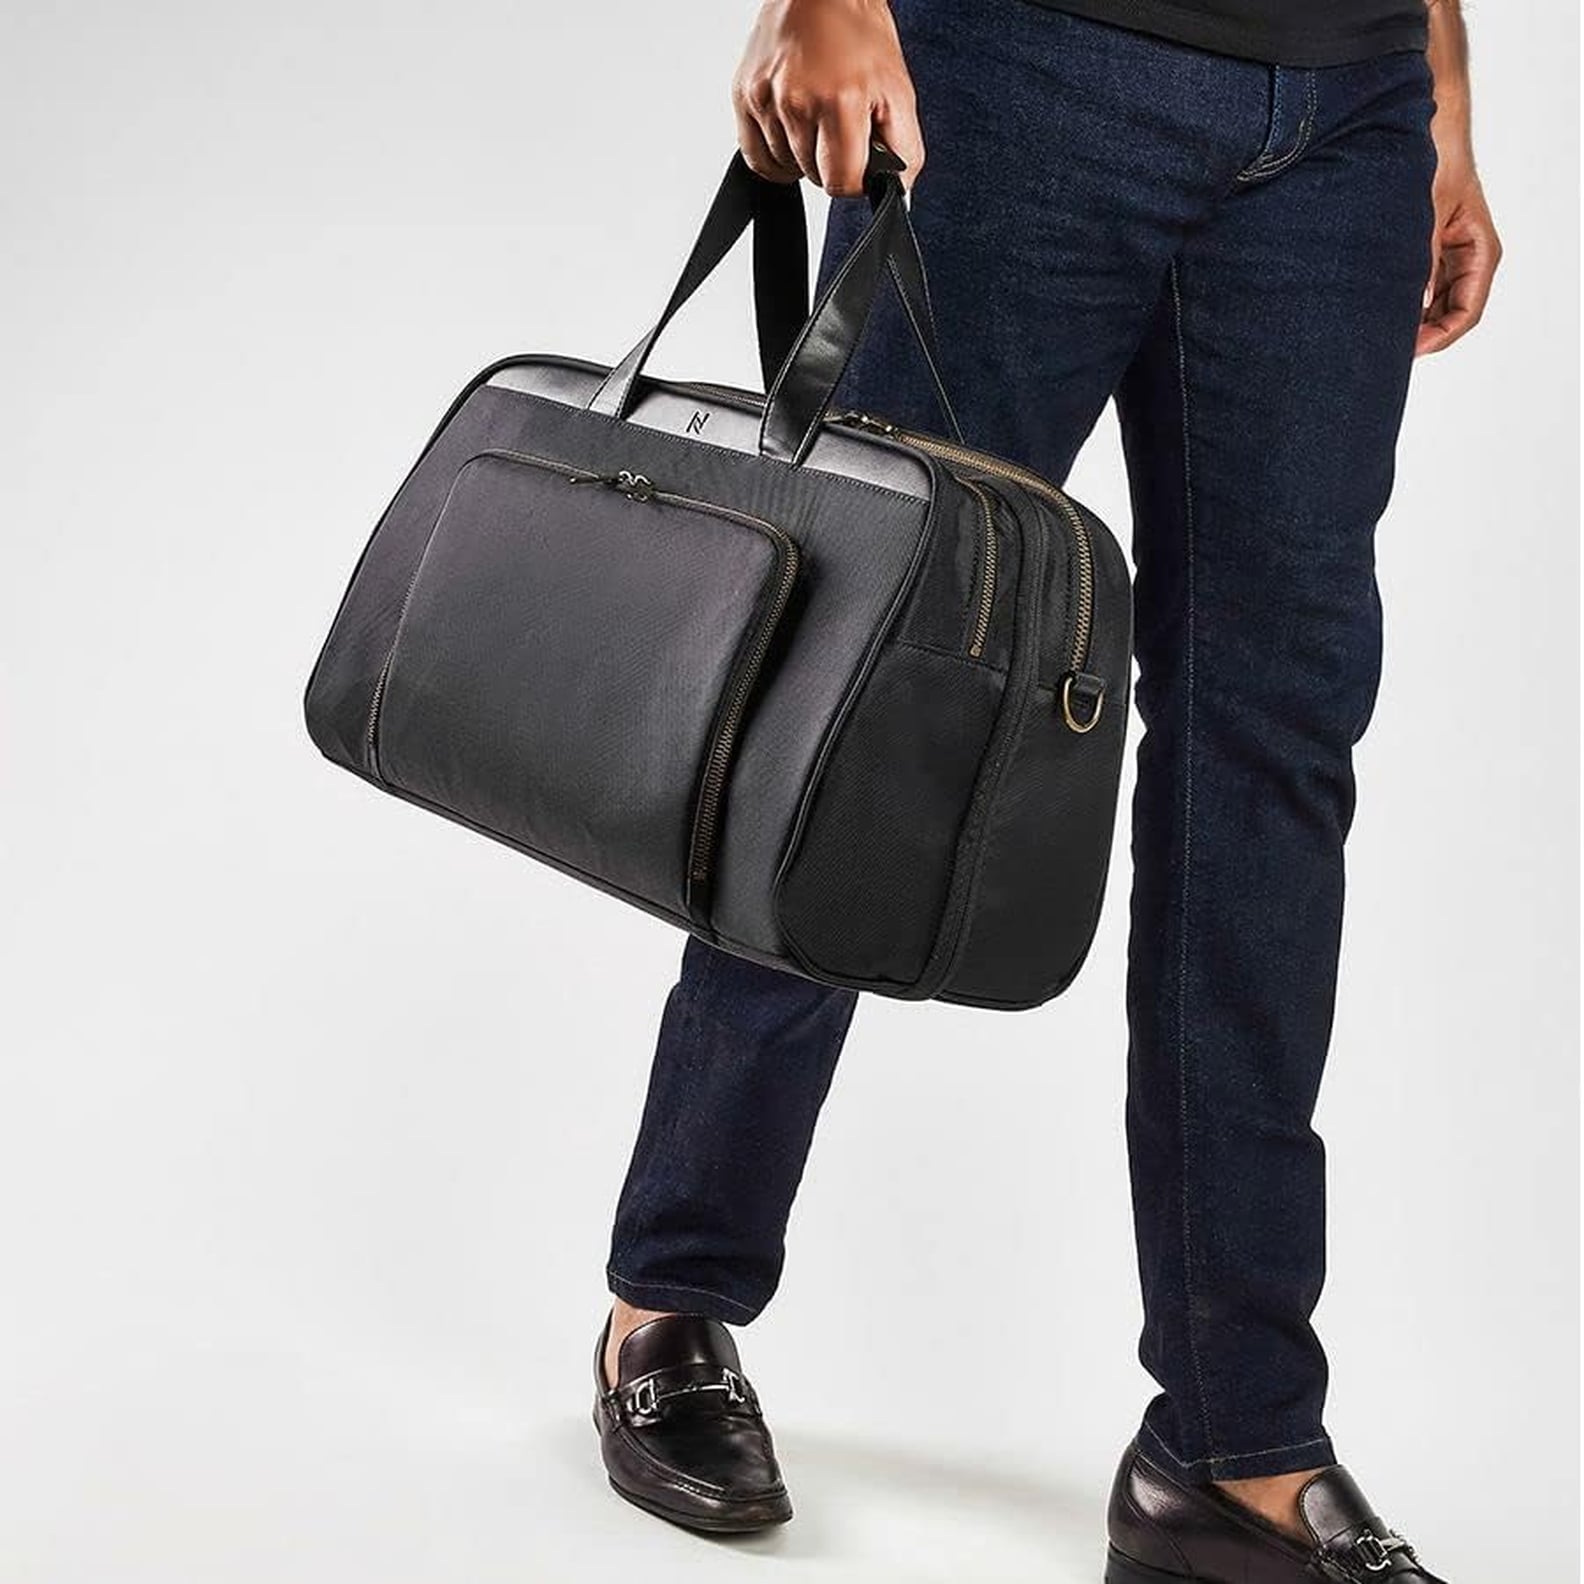 Best Personal-Item Carry-On Bags For Flying 2023 | POPSUGAR Smart Living